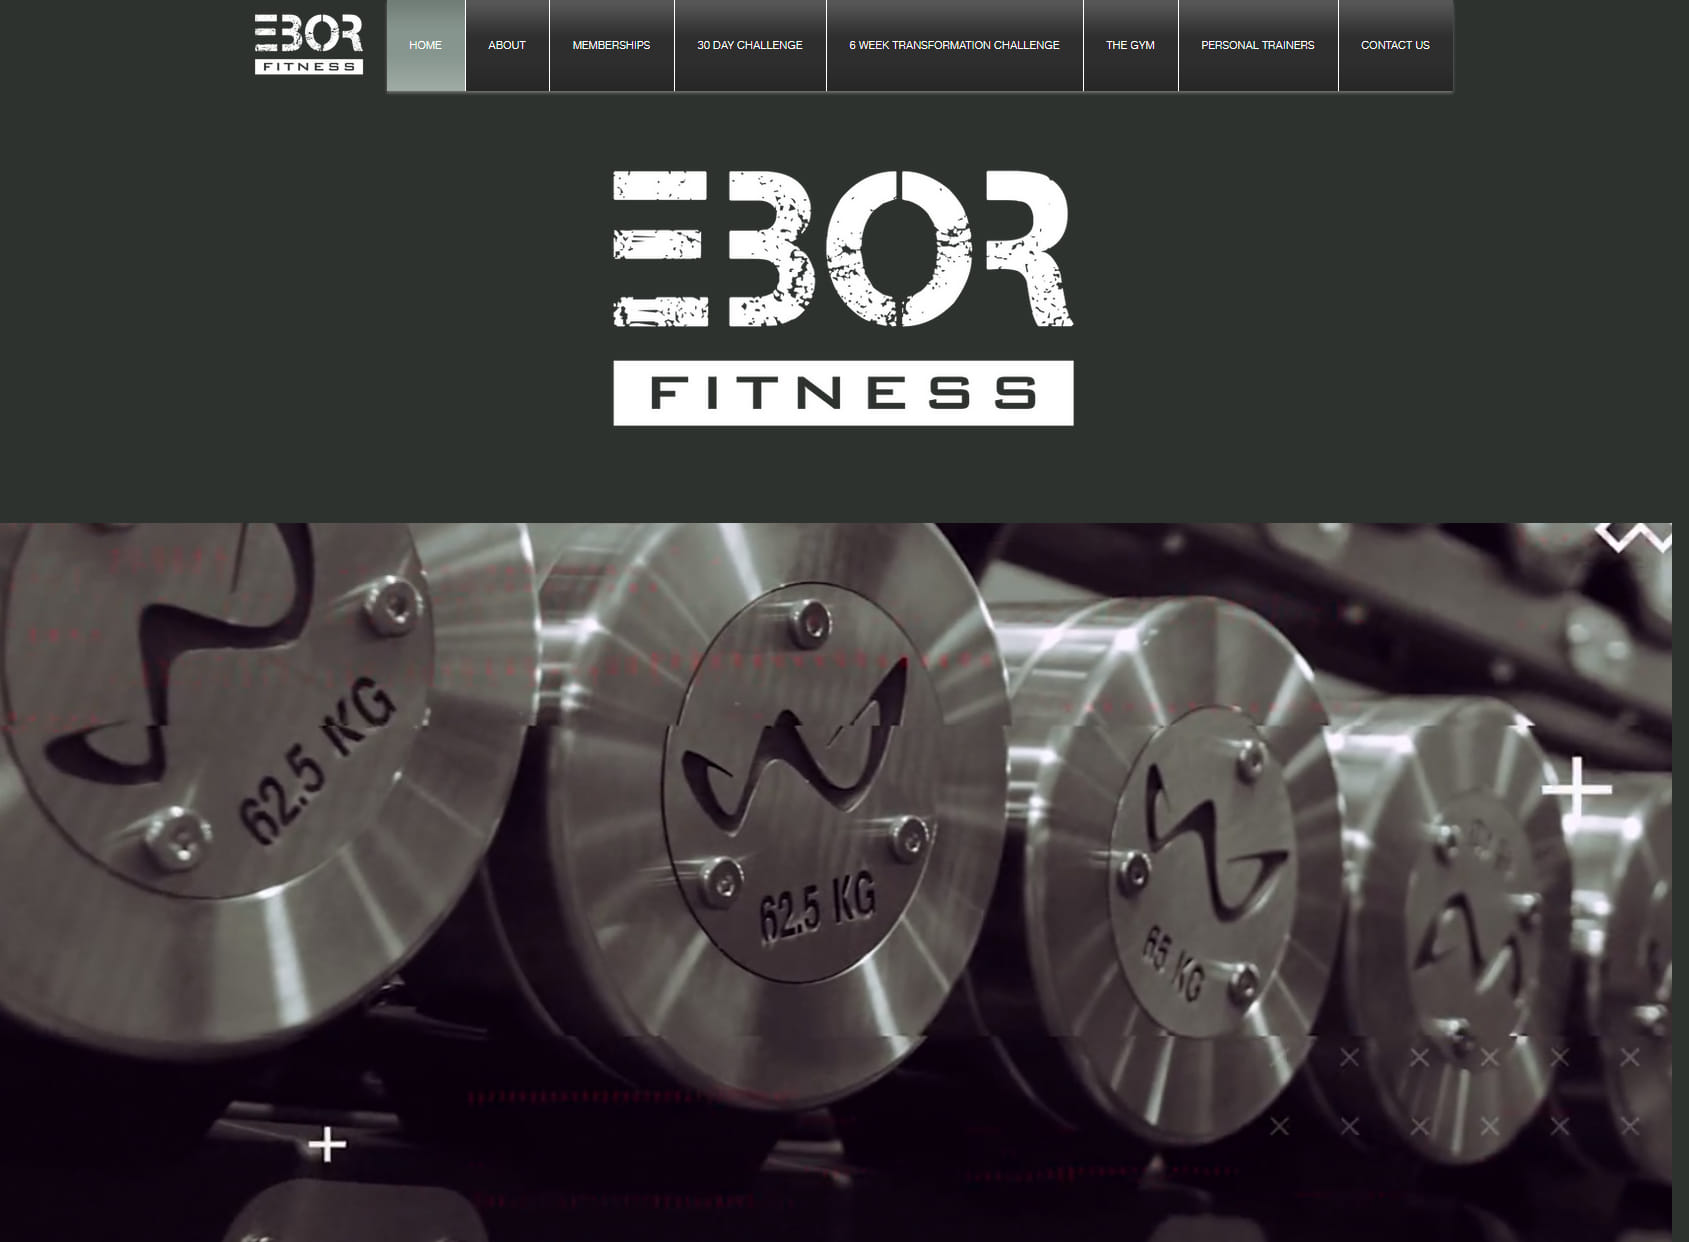 Ebor Fitness